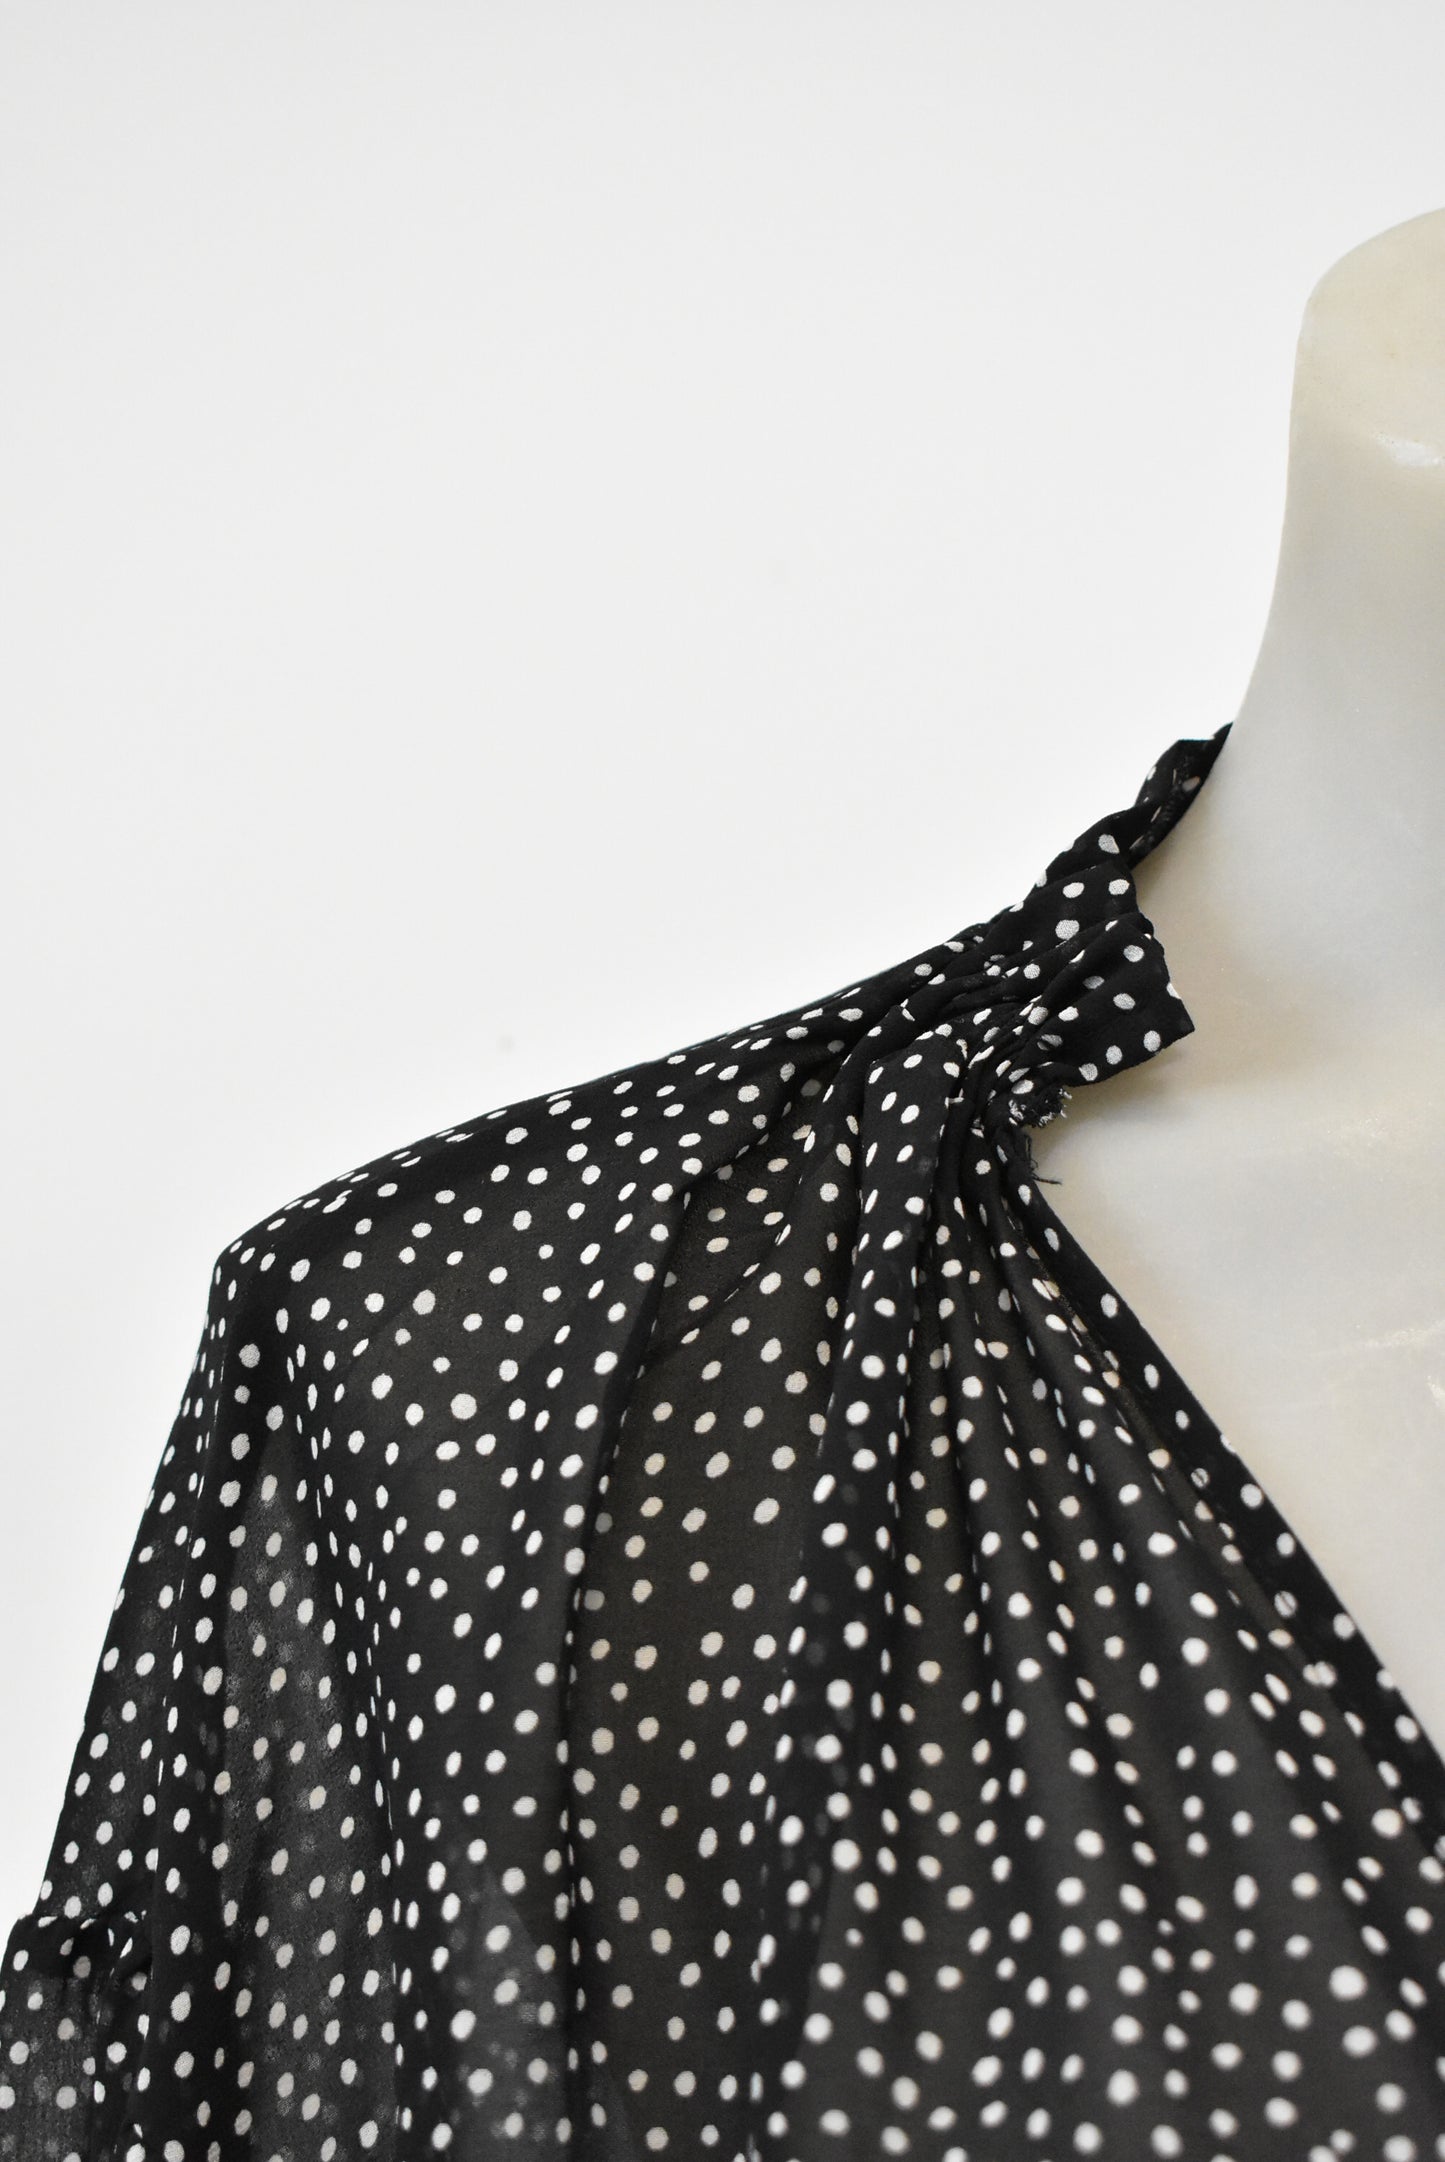 SNDYS long sleeve black and white polka dot dress, size s